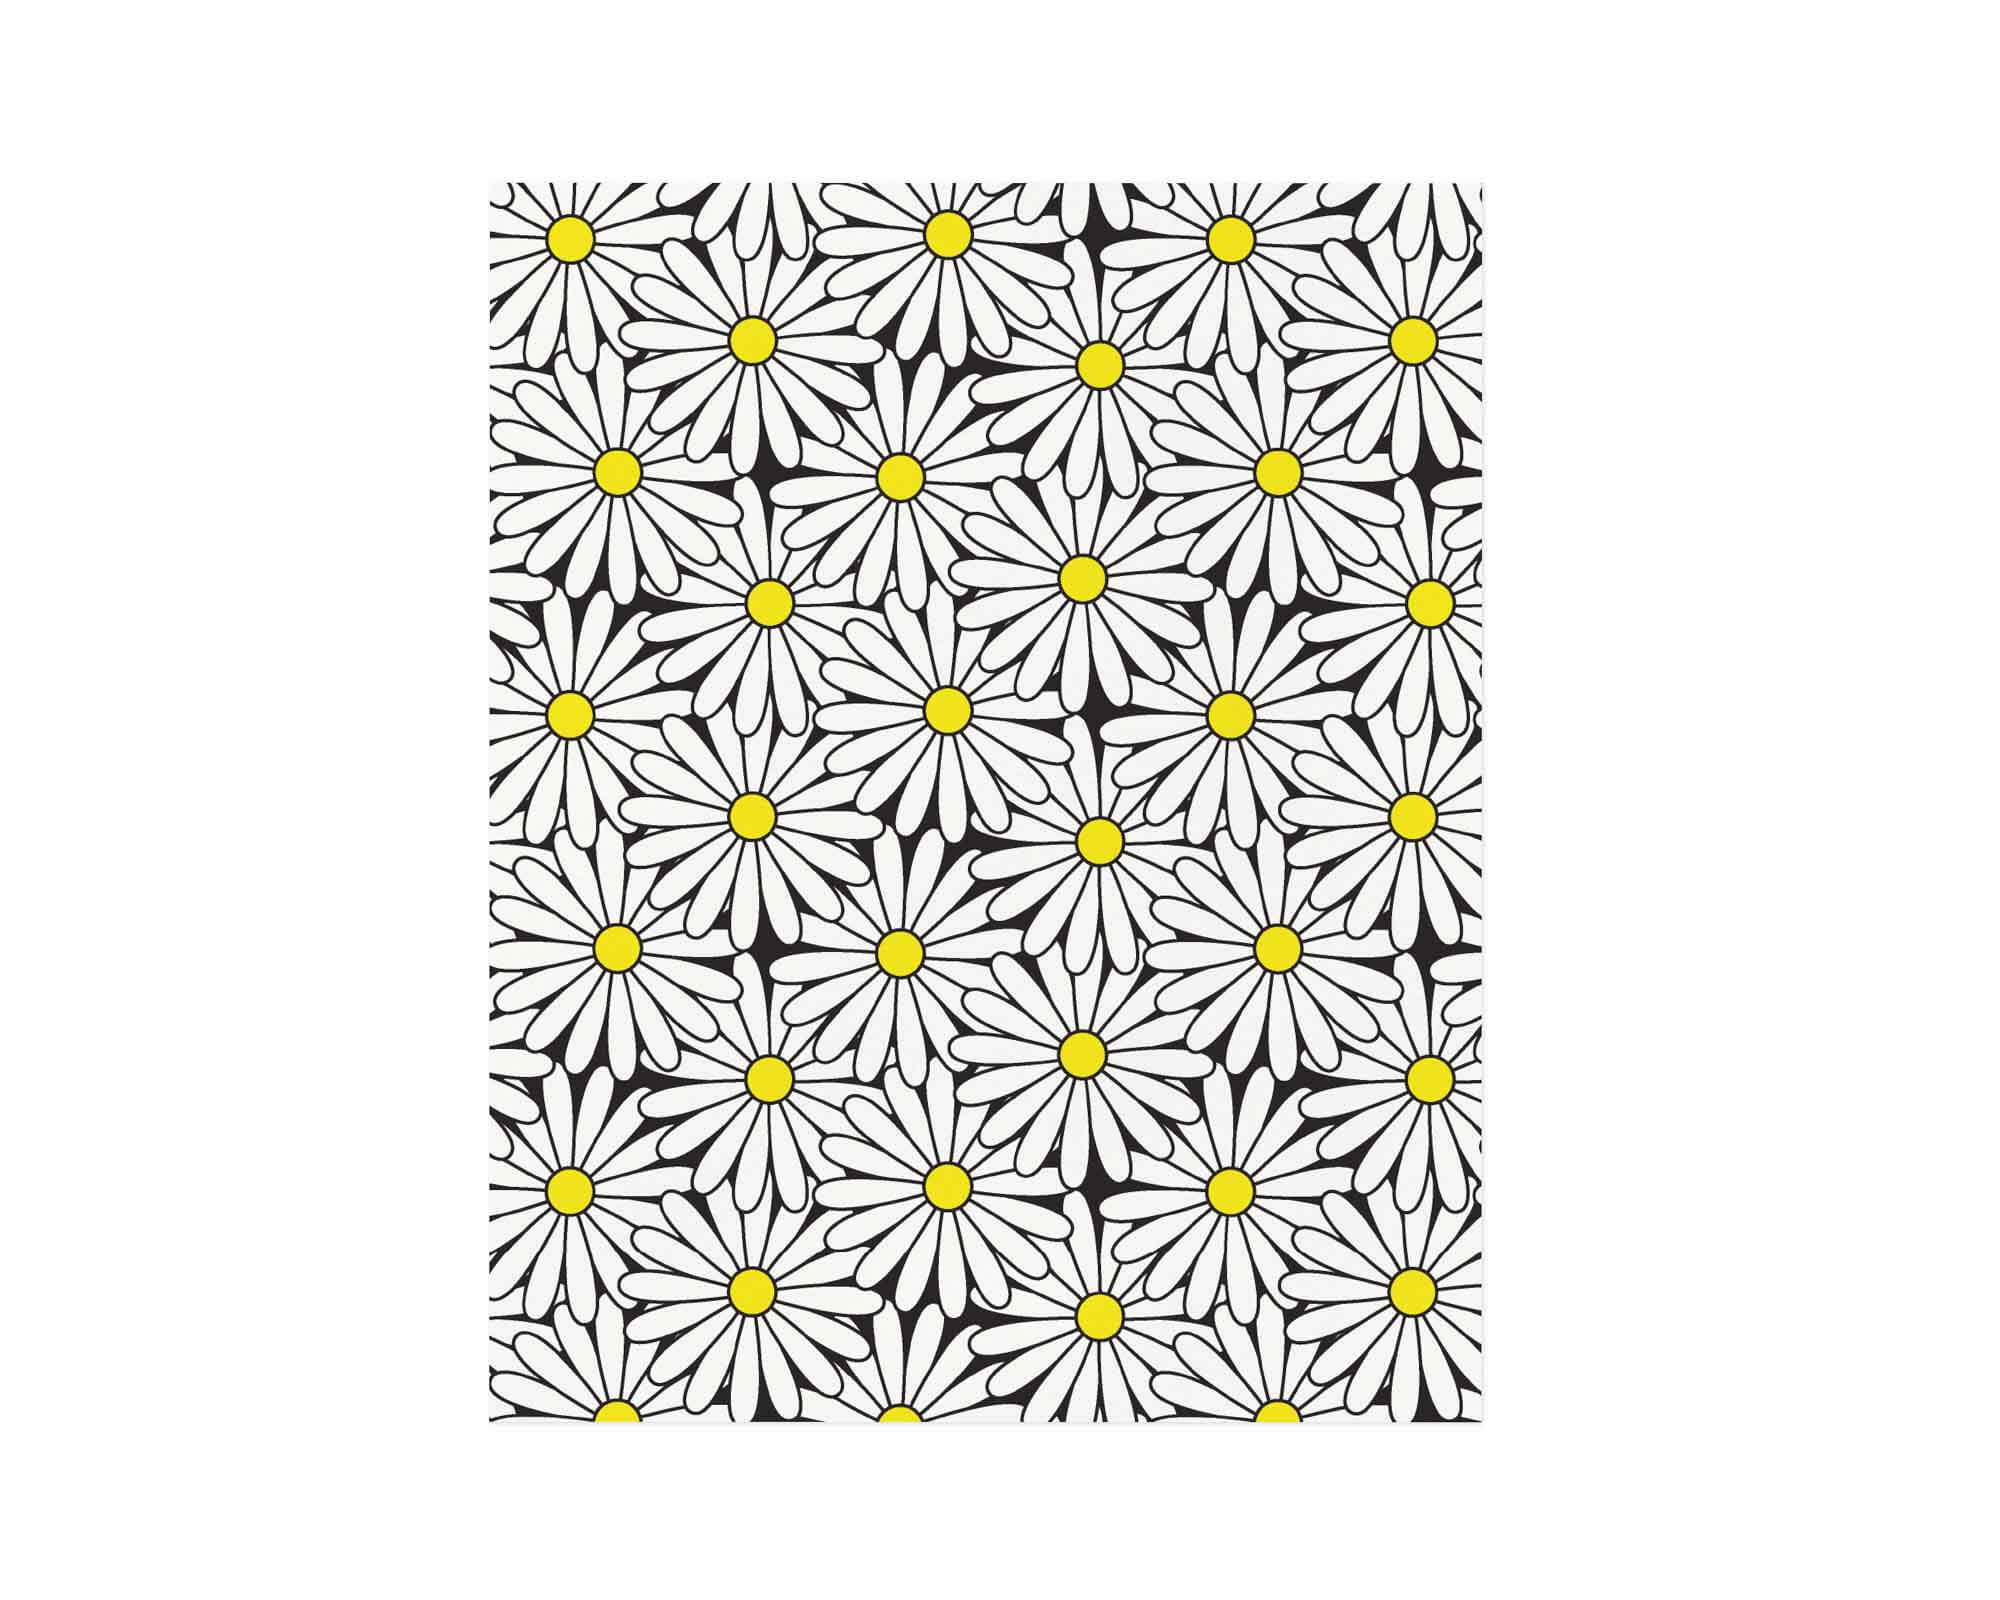 "Daisy Love" black and white daisy pattern archival giclée art print. Made in USA by My Darlin' @mydarlin_bk